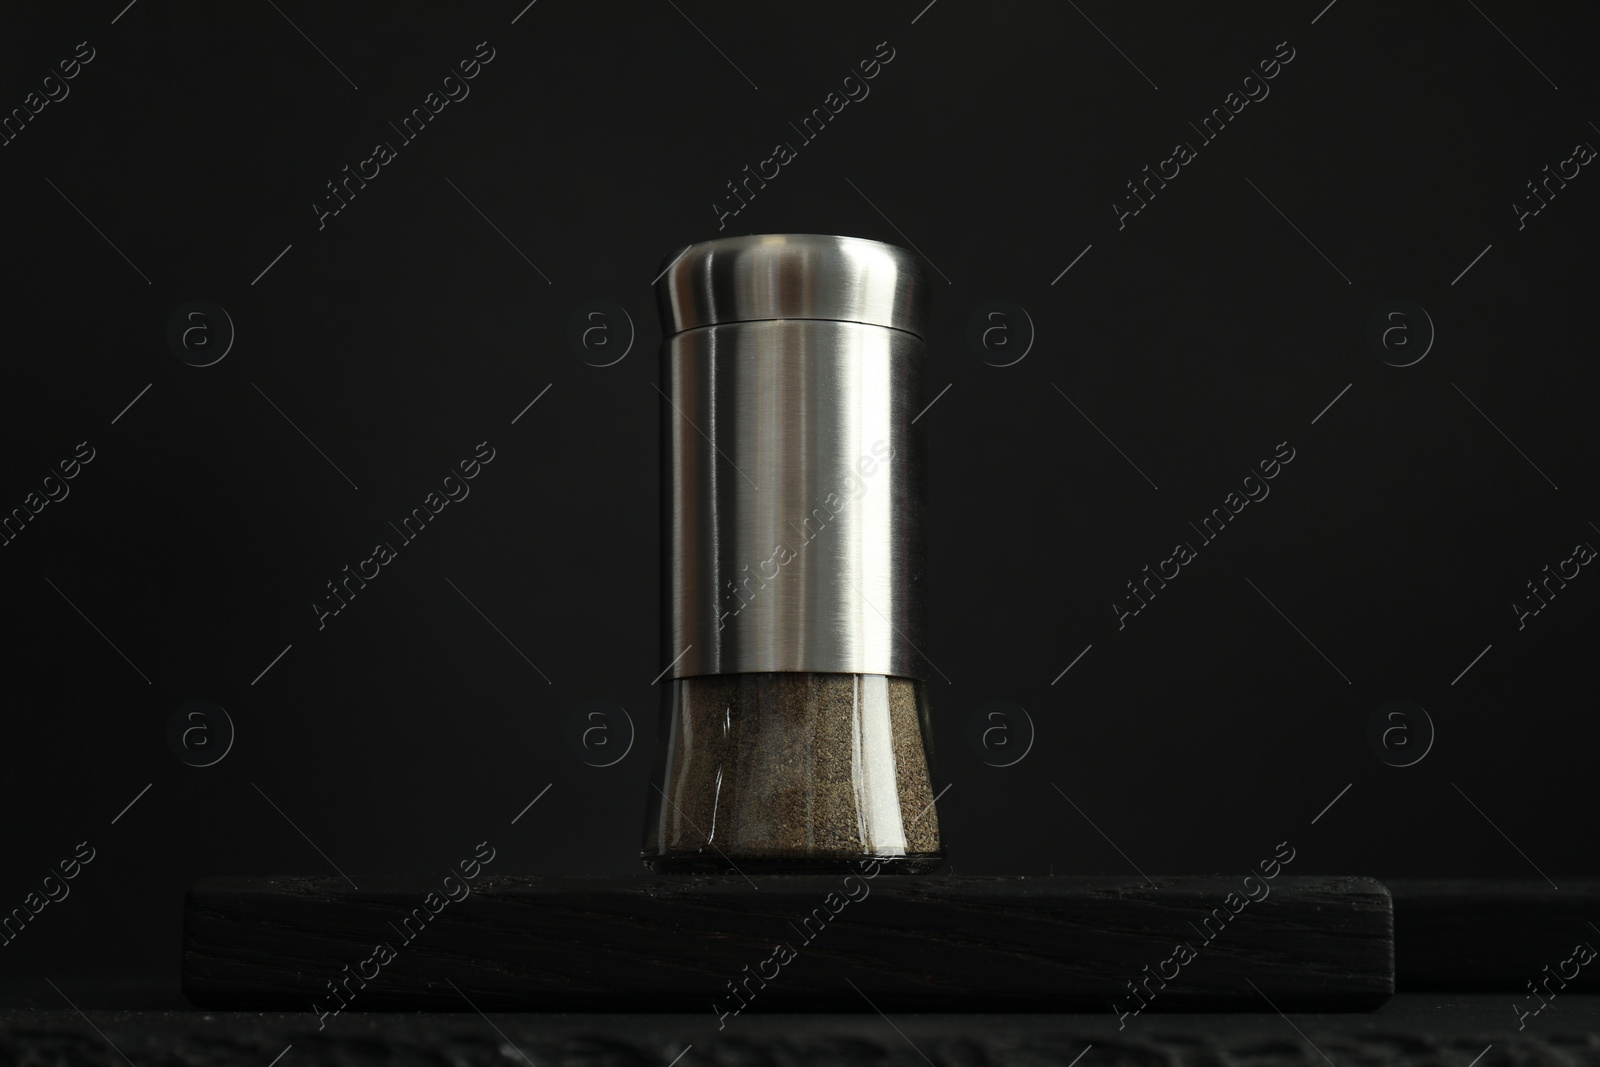 Photo of Pepper shaker on table against black background